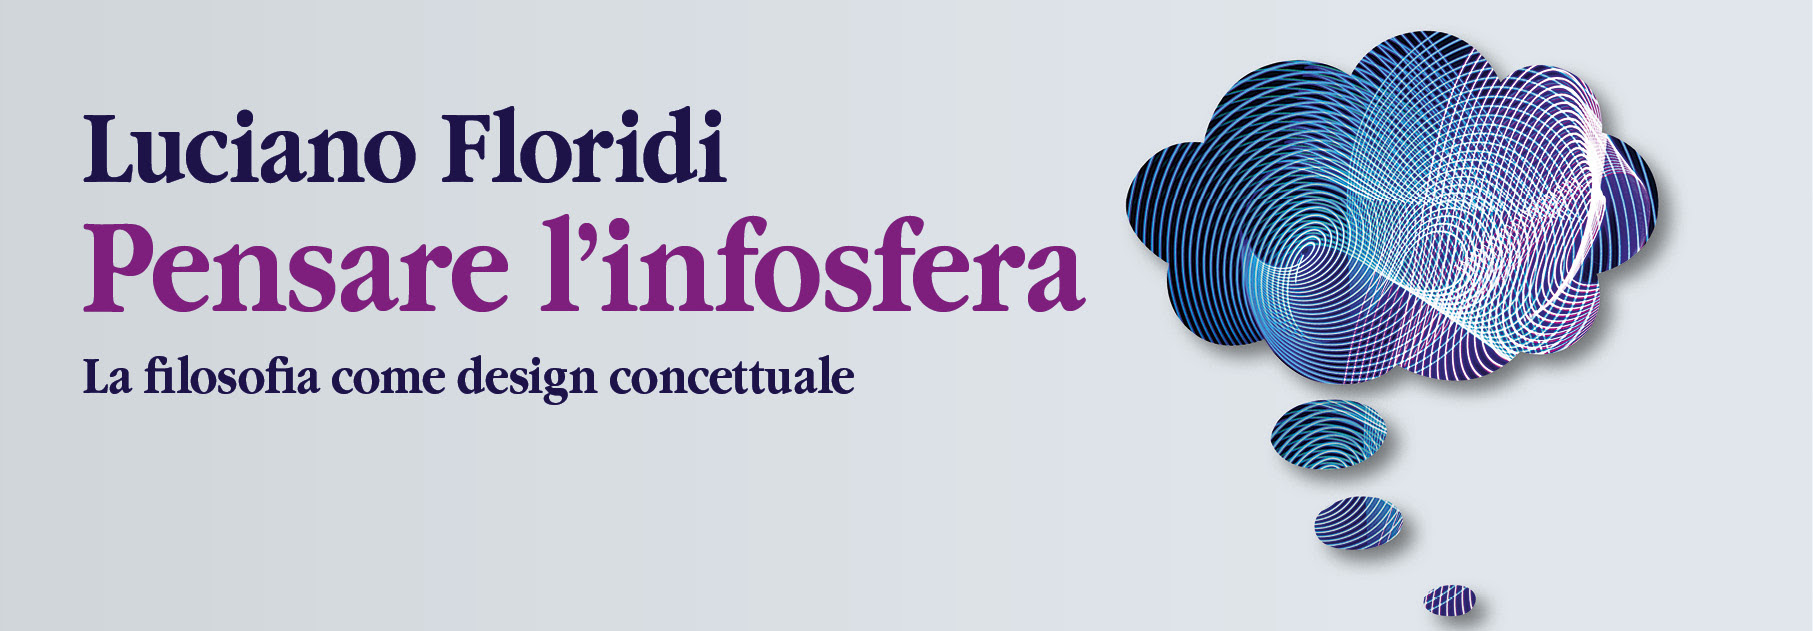 Luciano Floridi - Pensare l'infosfera